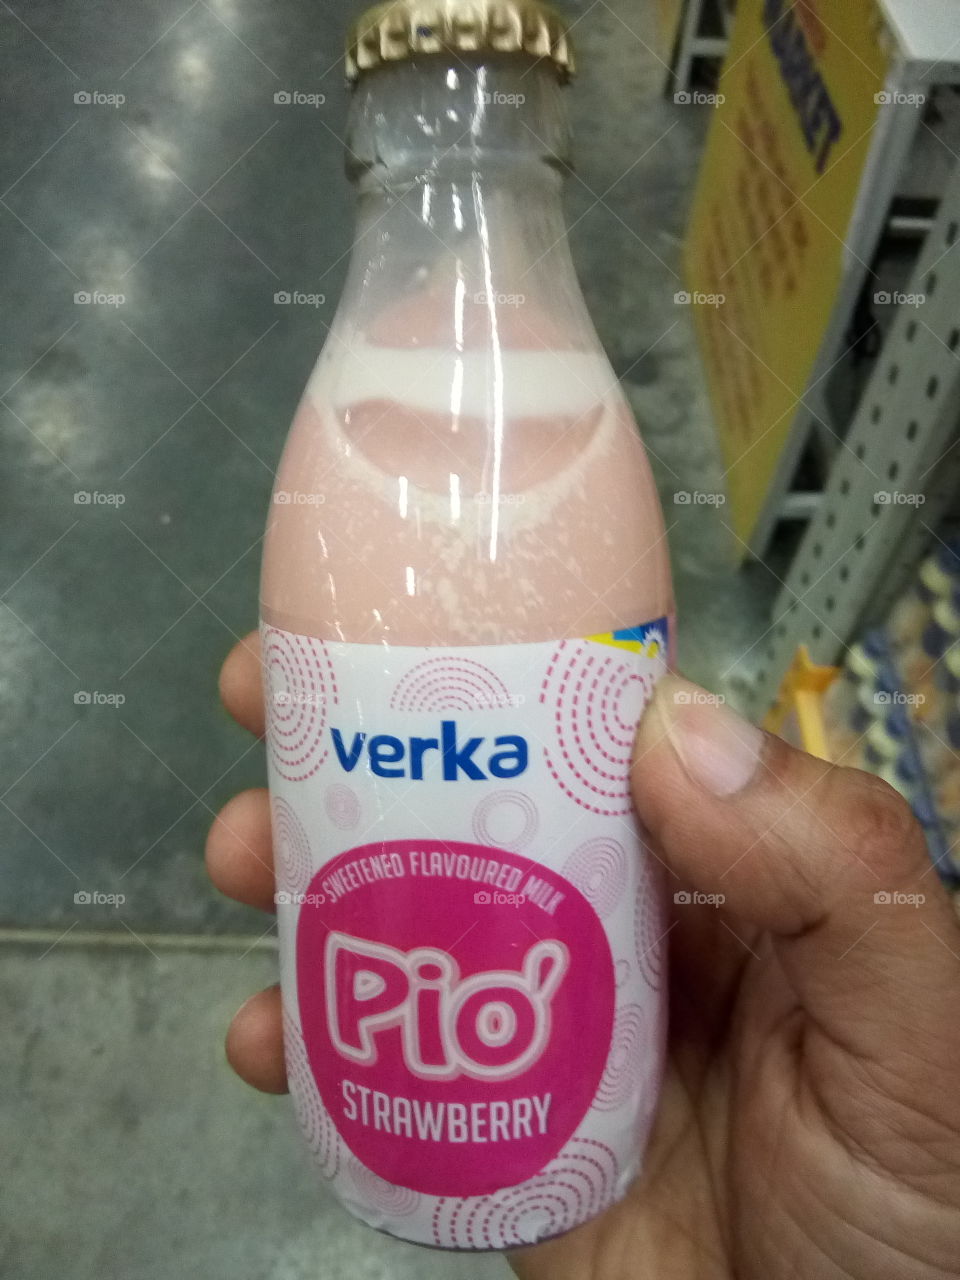 Verka strawberry flavored milk. Sweetened flavored milk